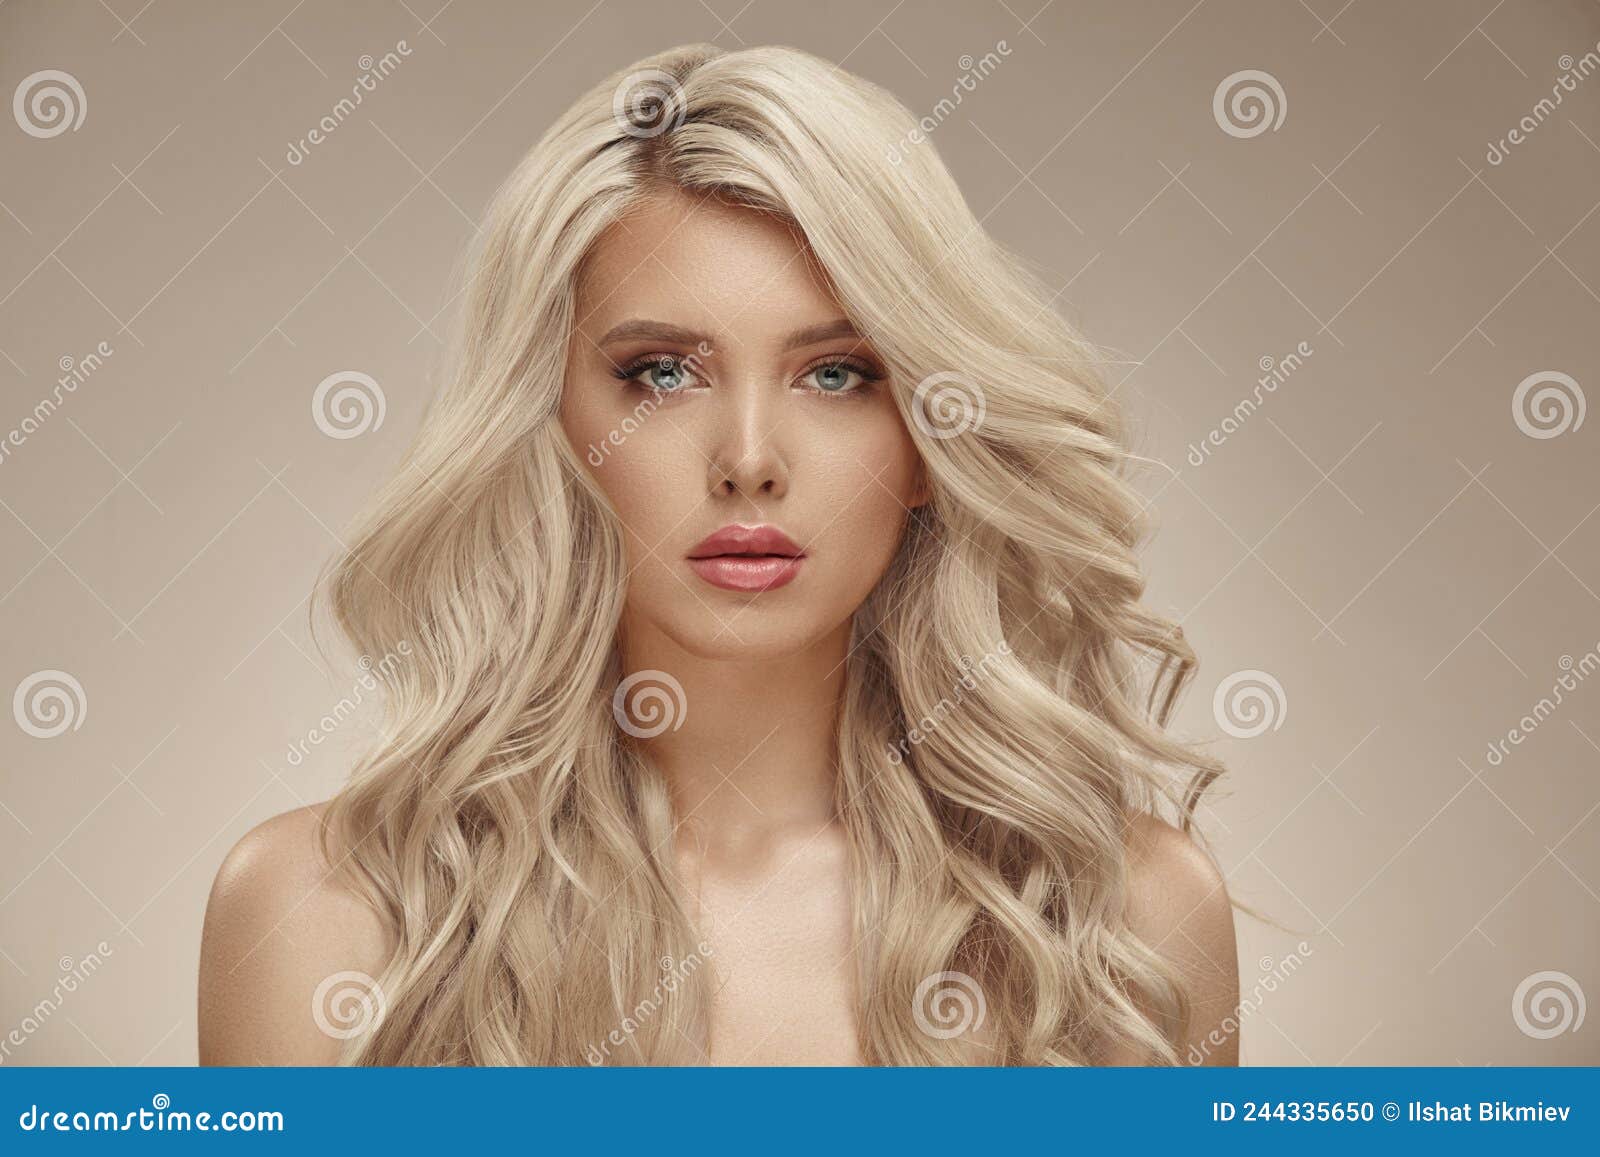 Blonde Hair Caucasian Beauty - wide 10